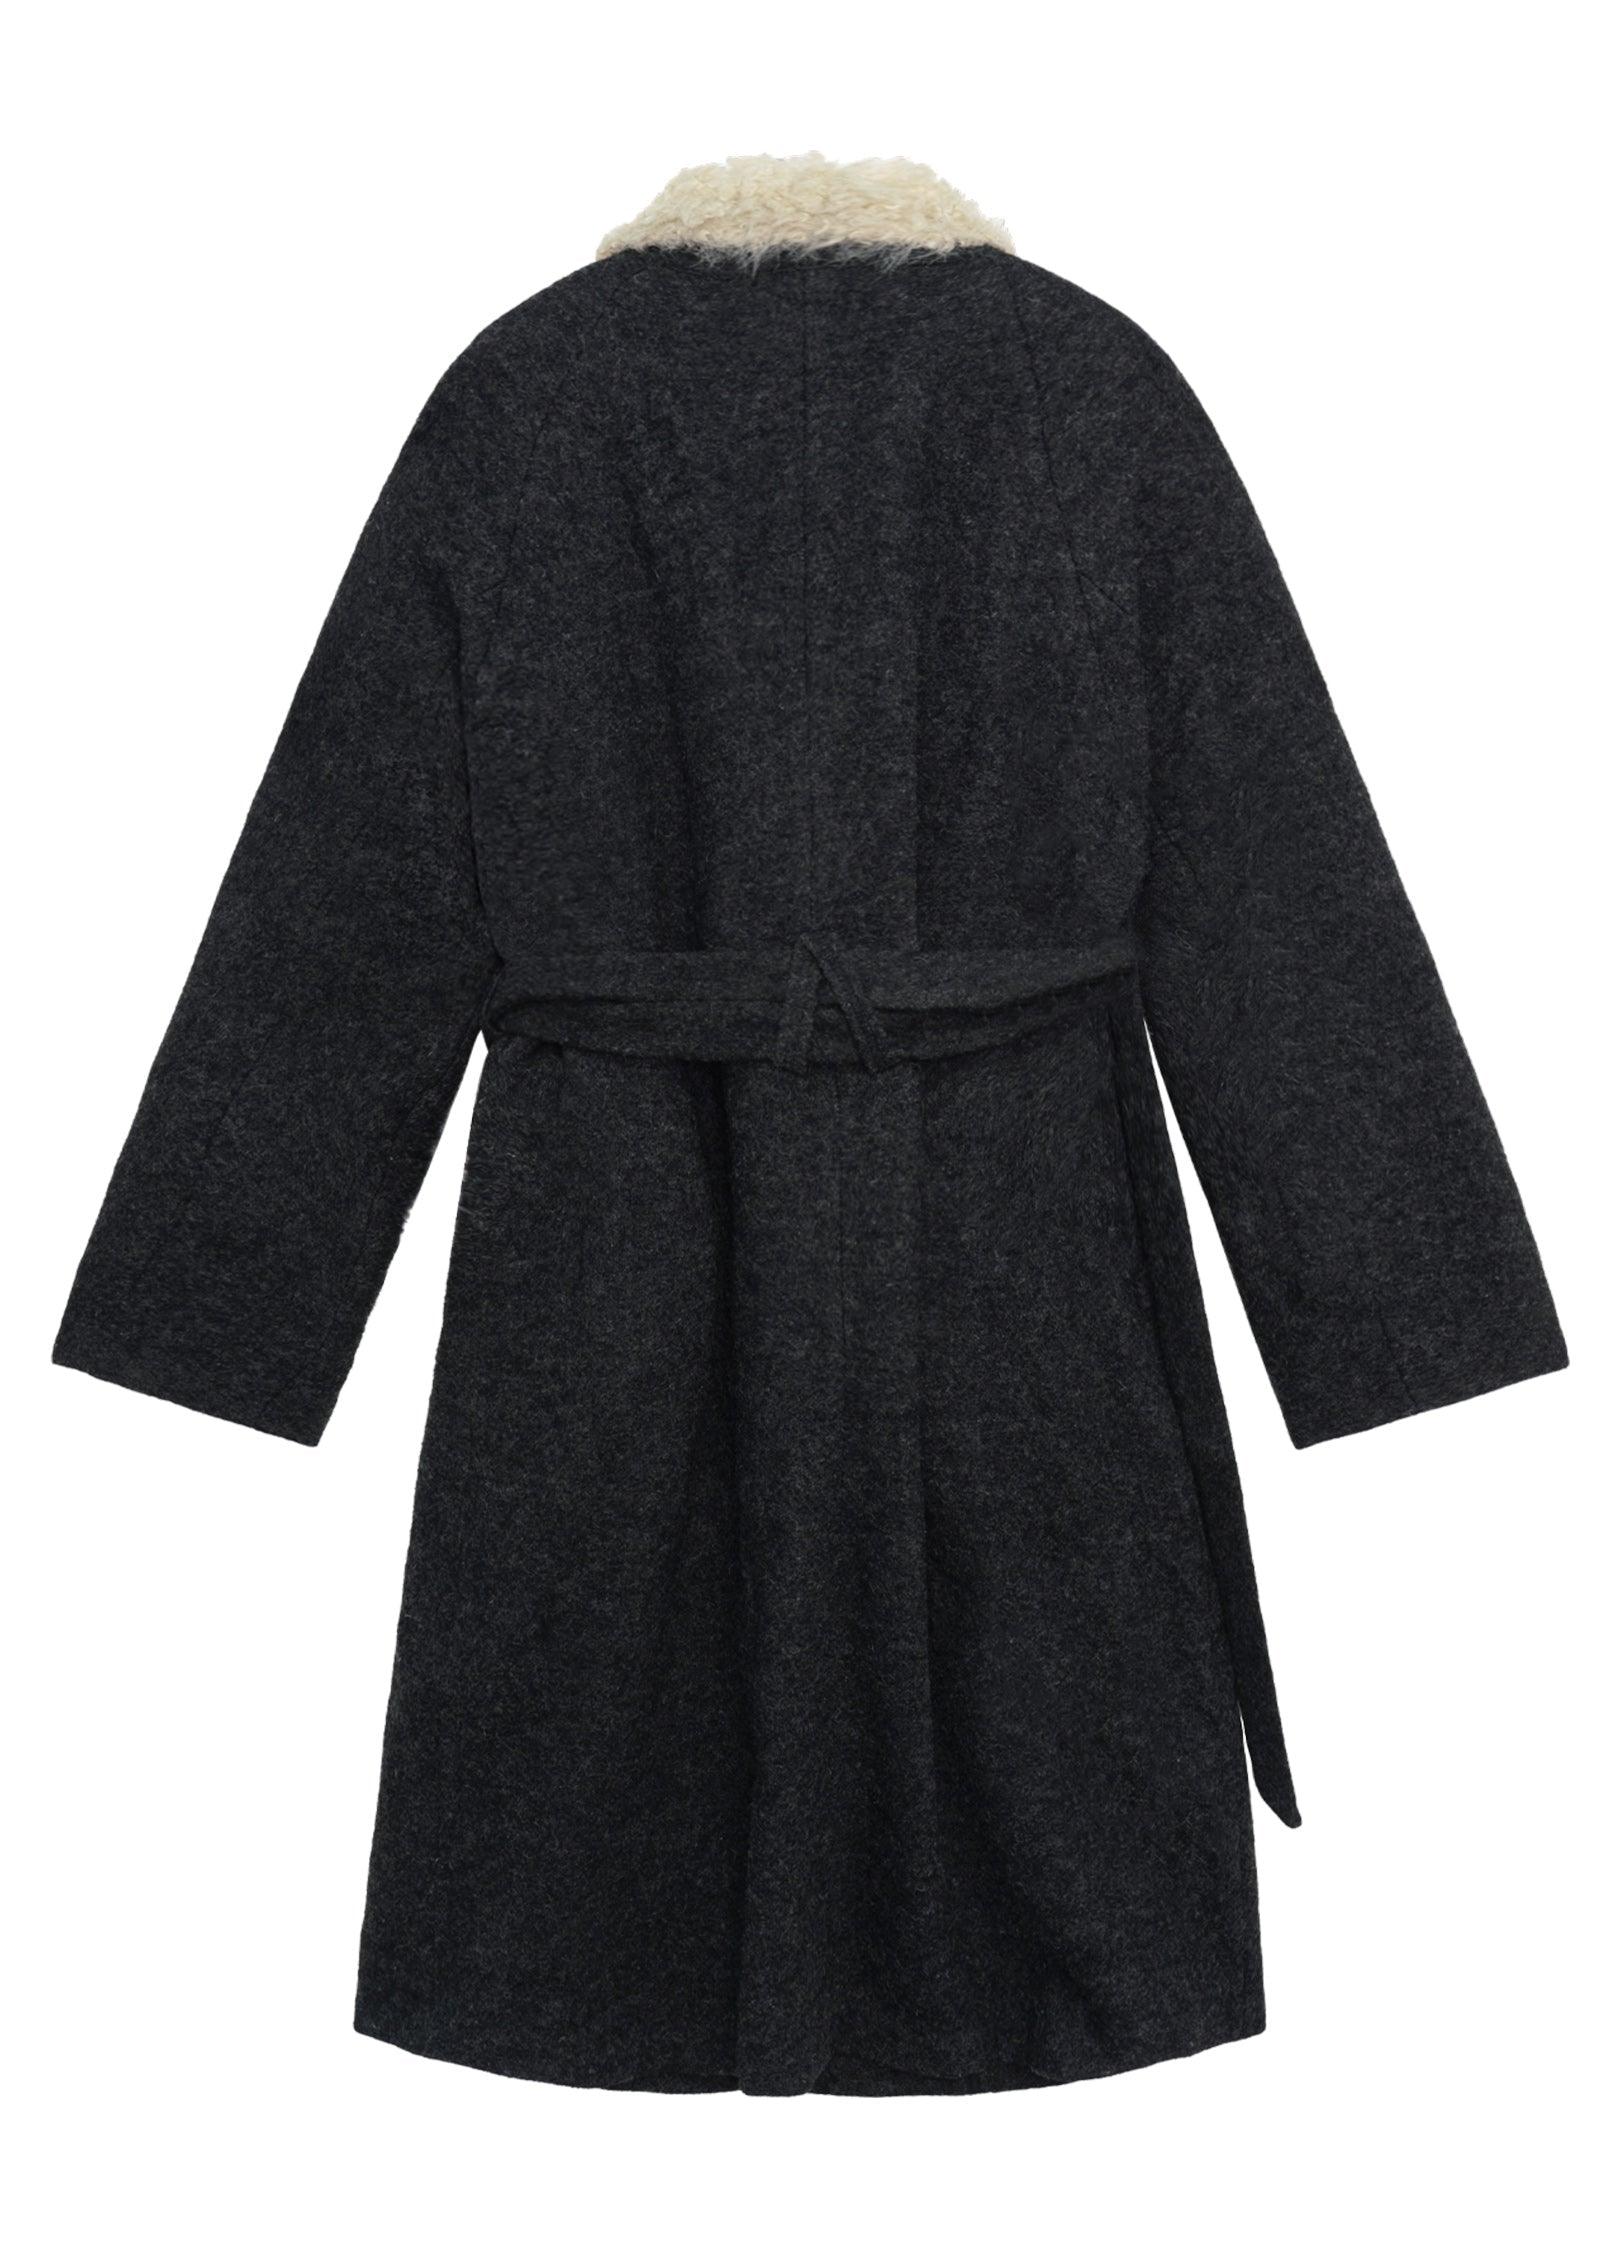 Luxurious Shearling Wool Blend Overcoat - chiclara